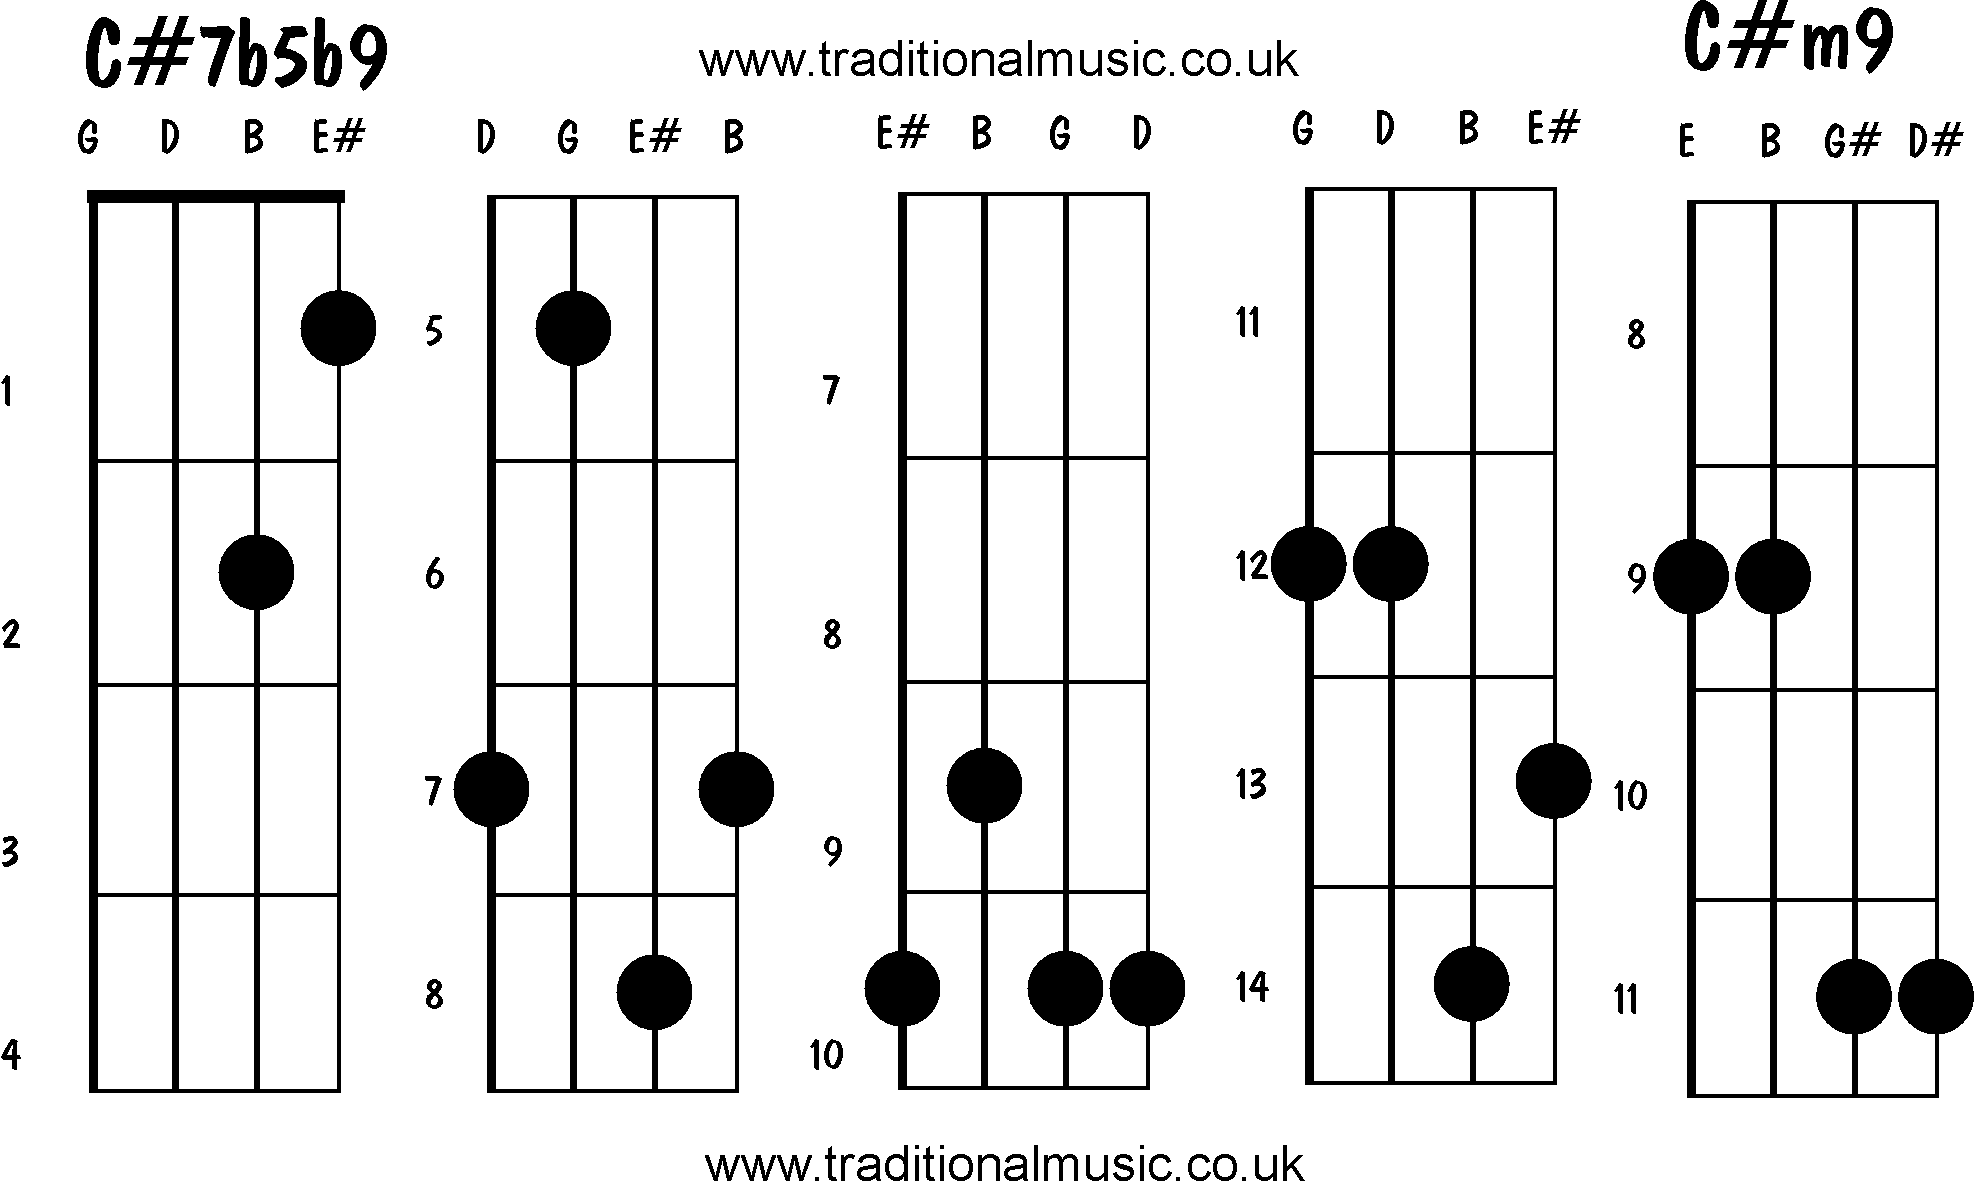 Advanced mandolin chords: C#7b5b9, C#m9